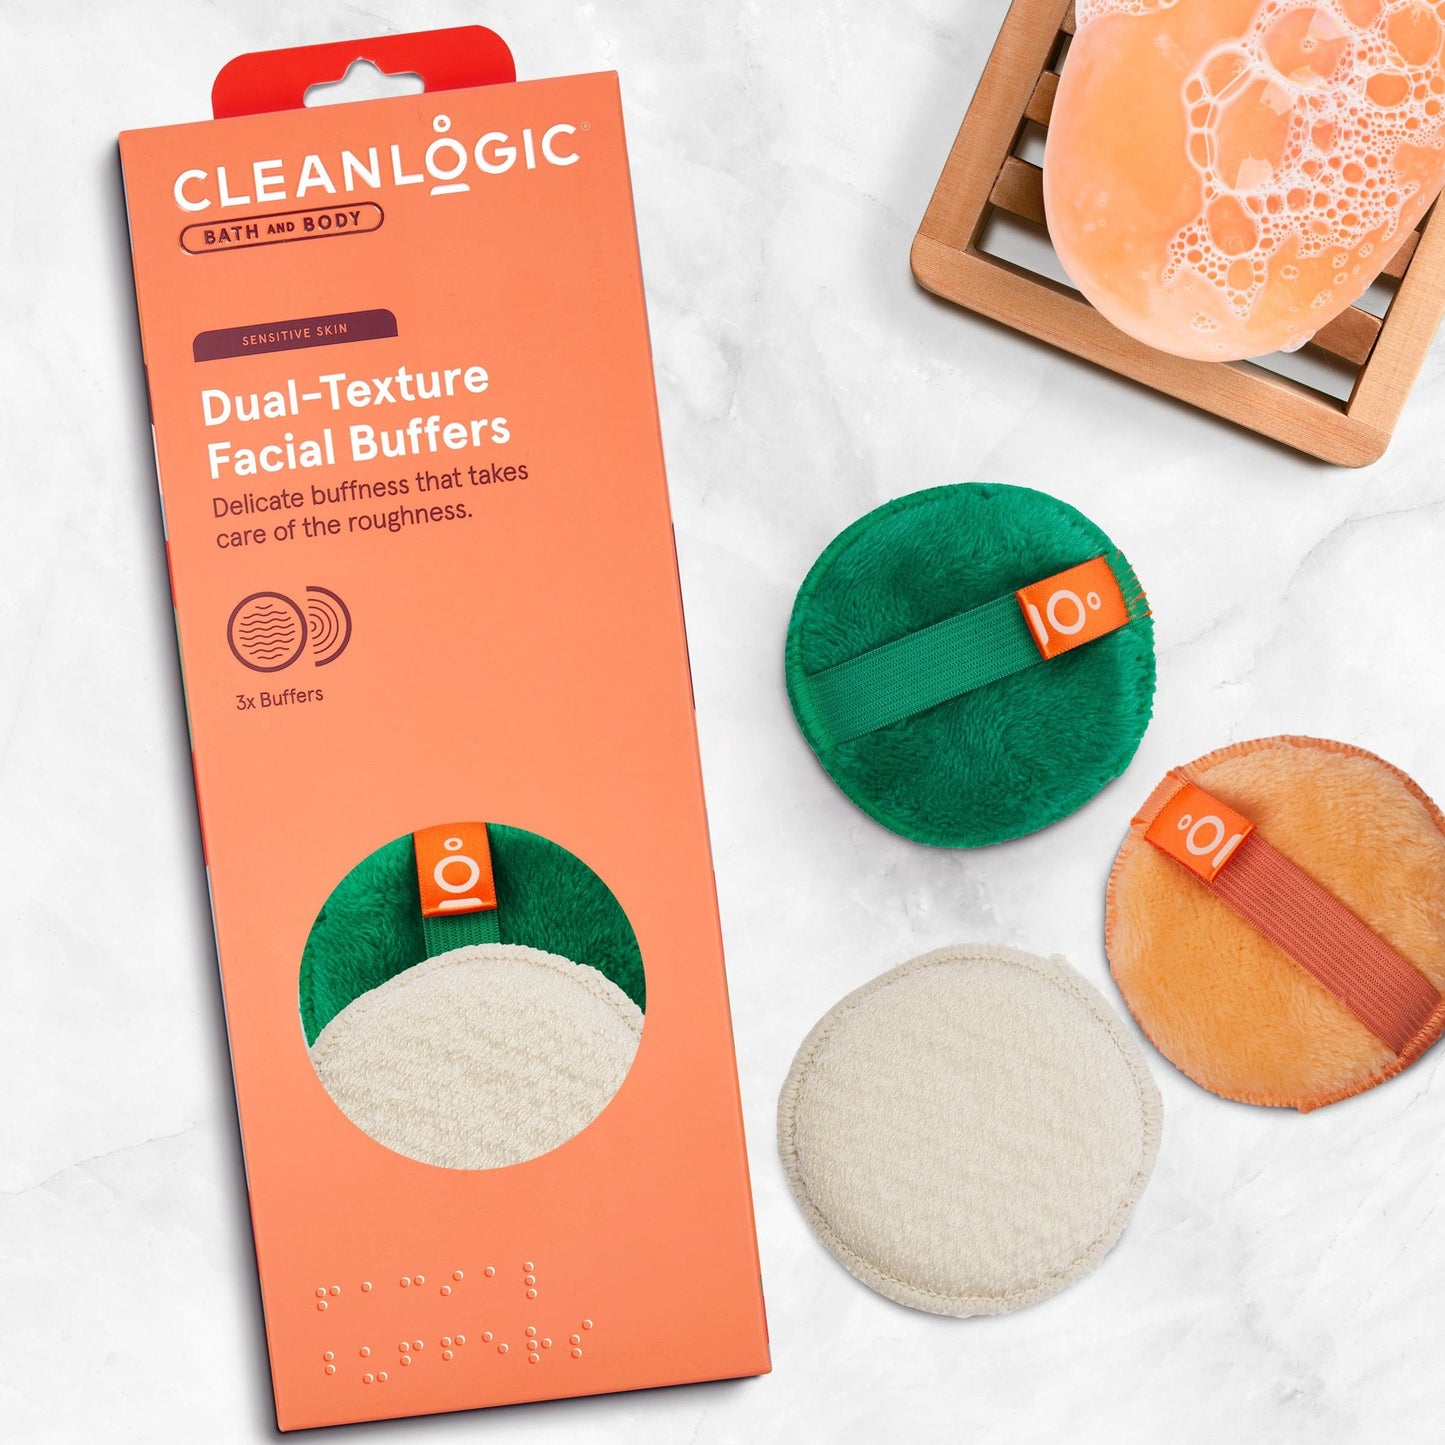 Sensitive Skin Facial Buffer by CleanLogic - 3 buffers included in orange package.